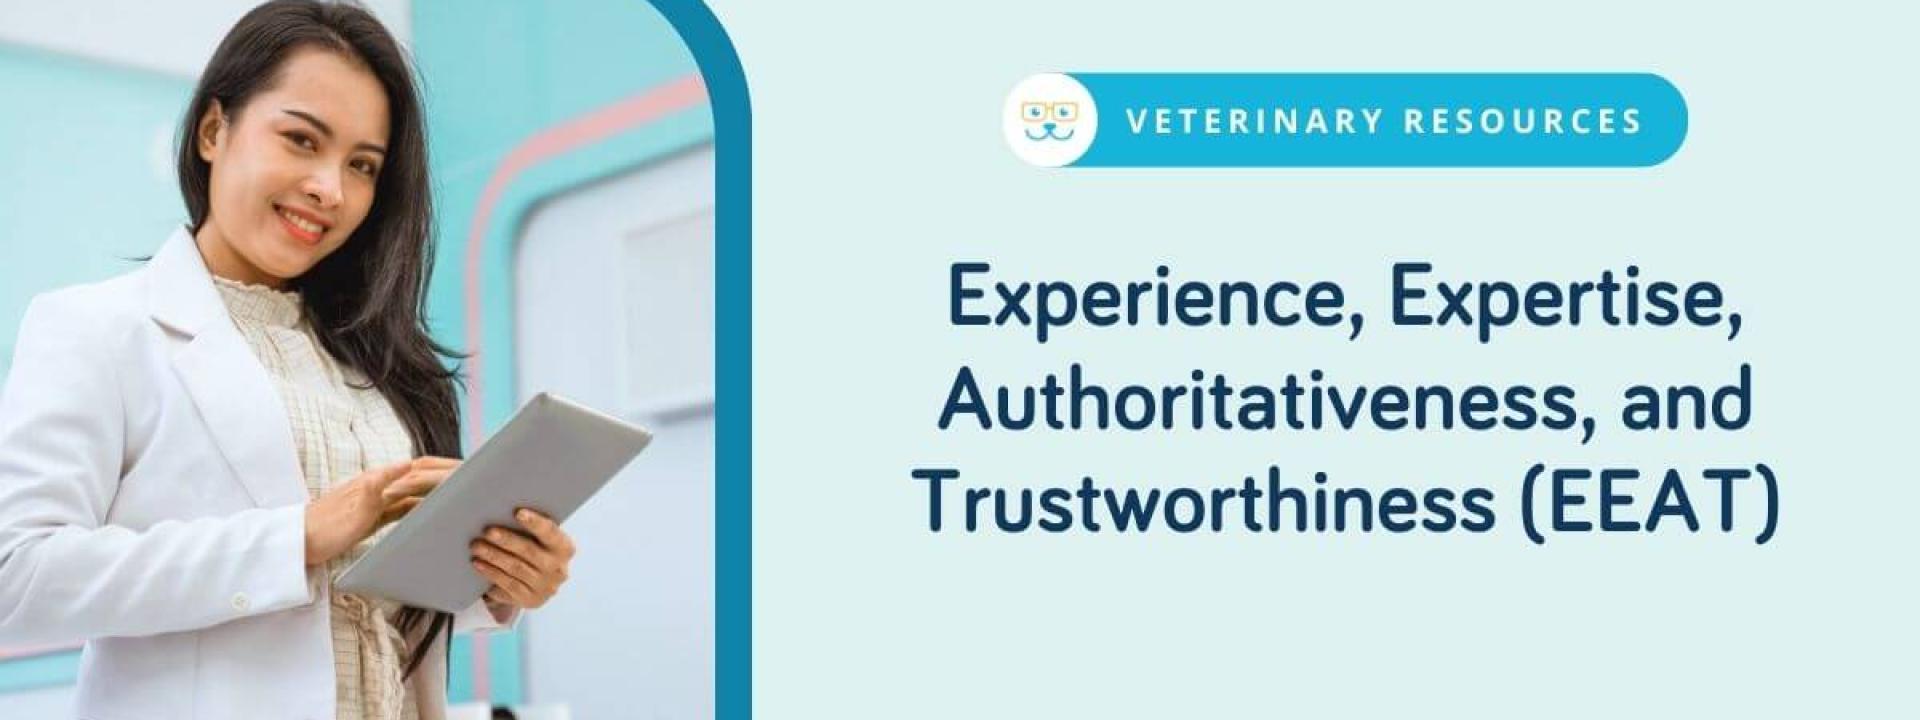 Experience, Expertise, Authoritativeness, and Trustworthiness (EEAT)